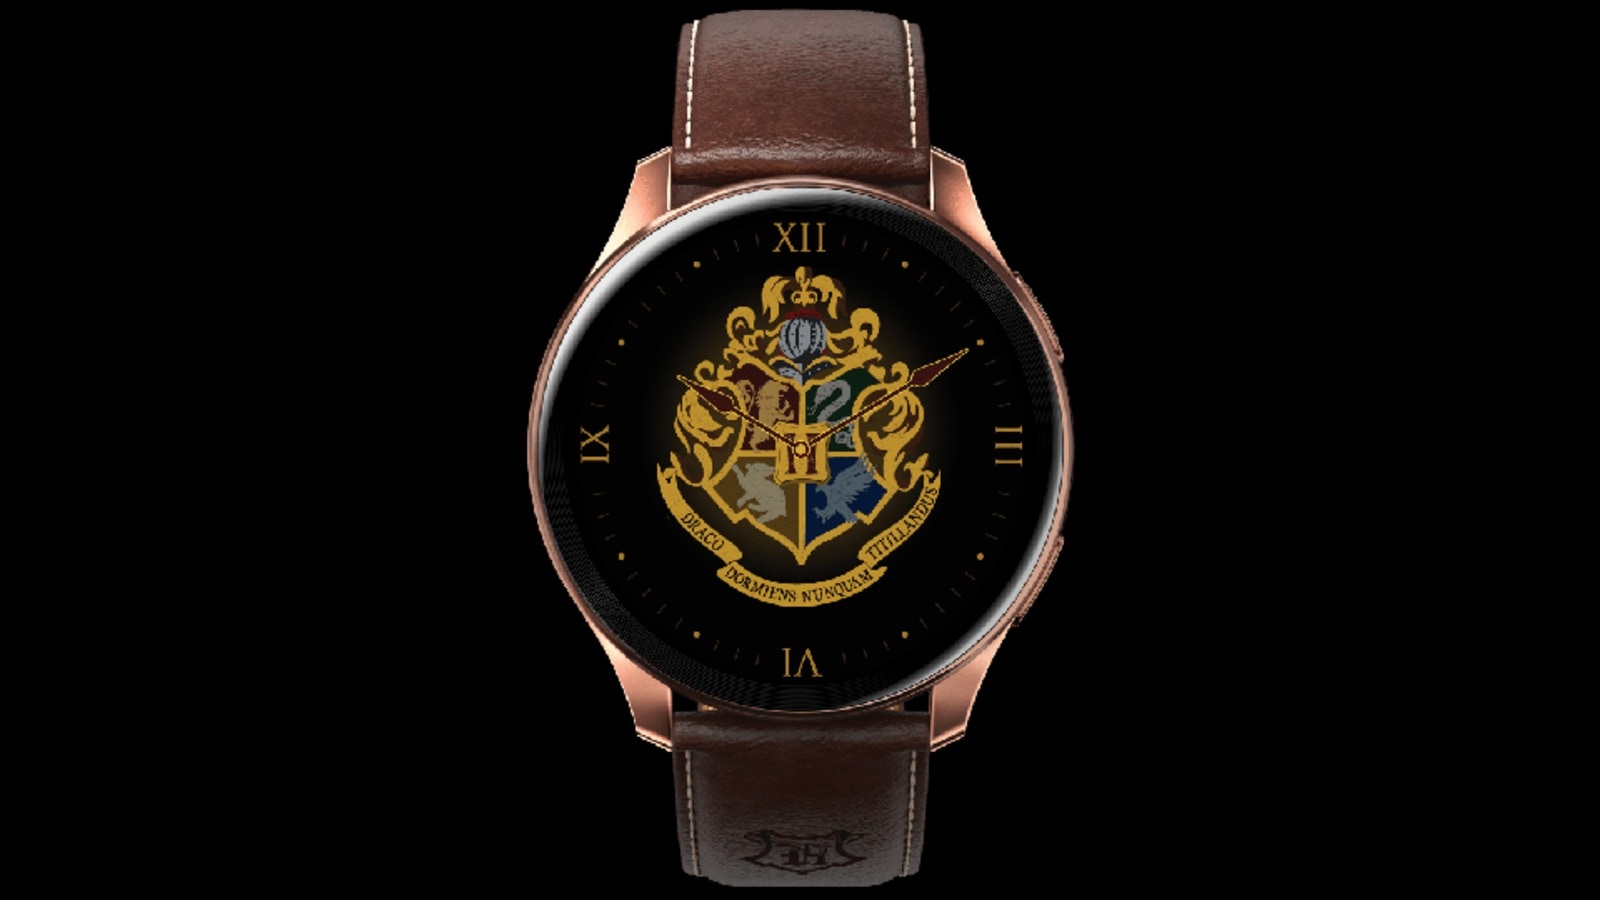 The OnePlus x Harry Potter smartwatch is top-tier Hogwarts wristwear